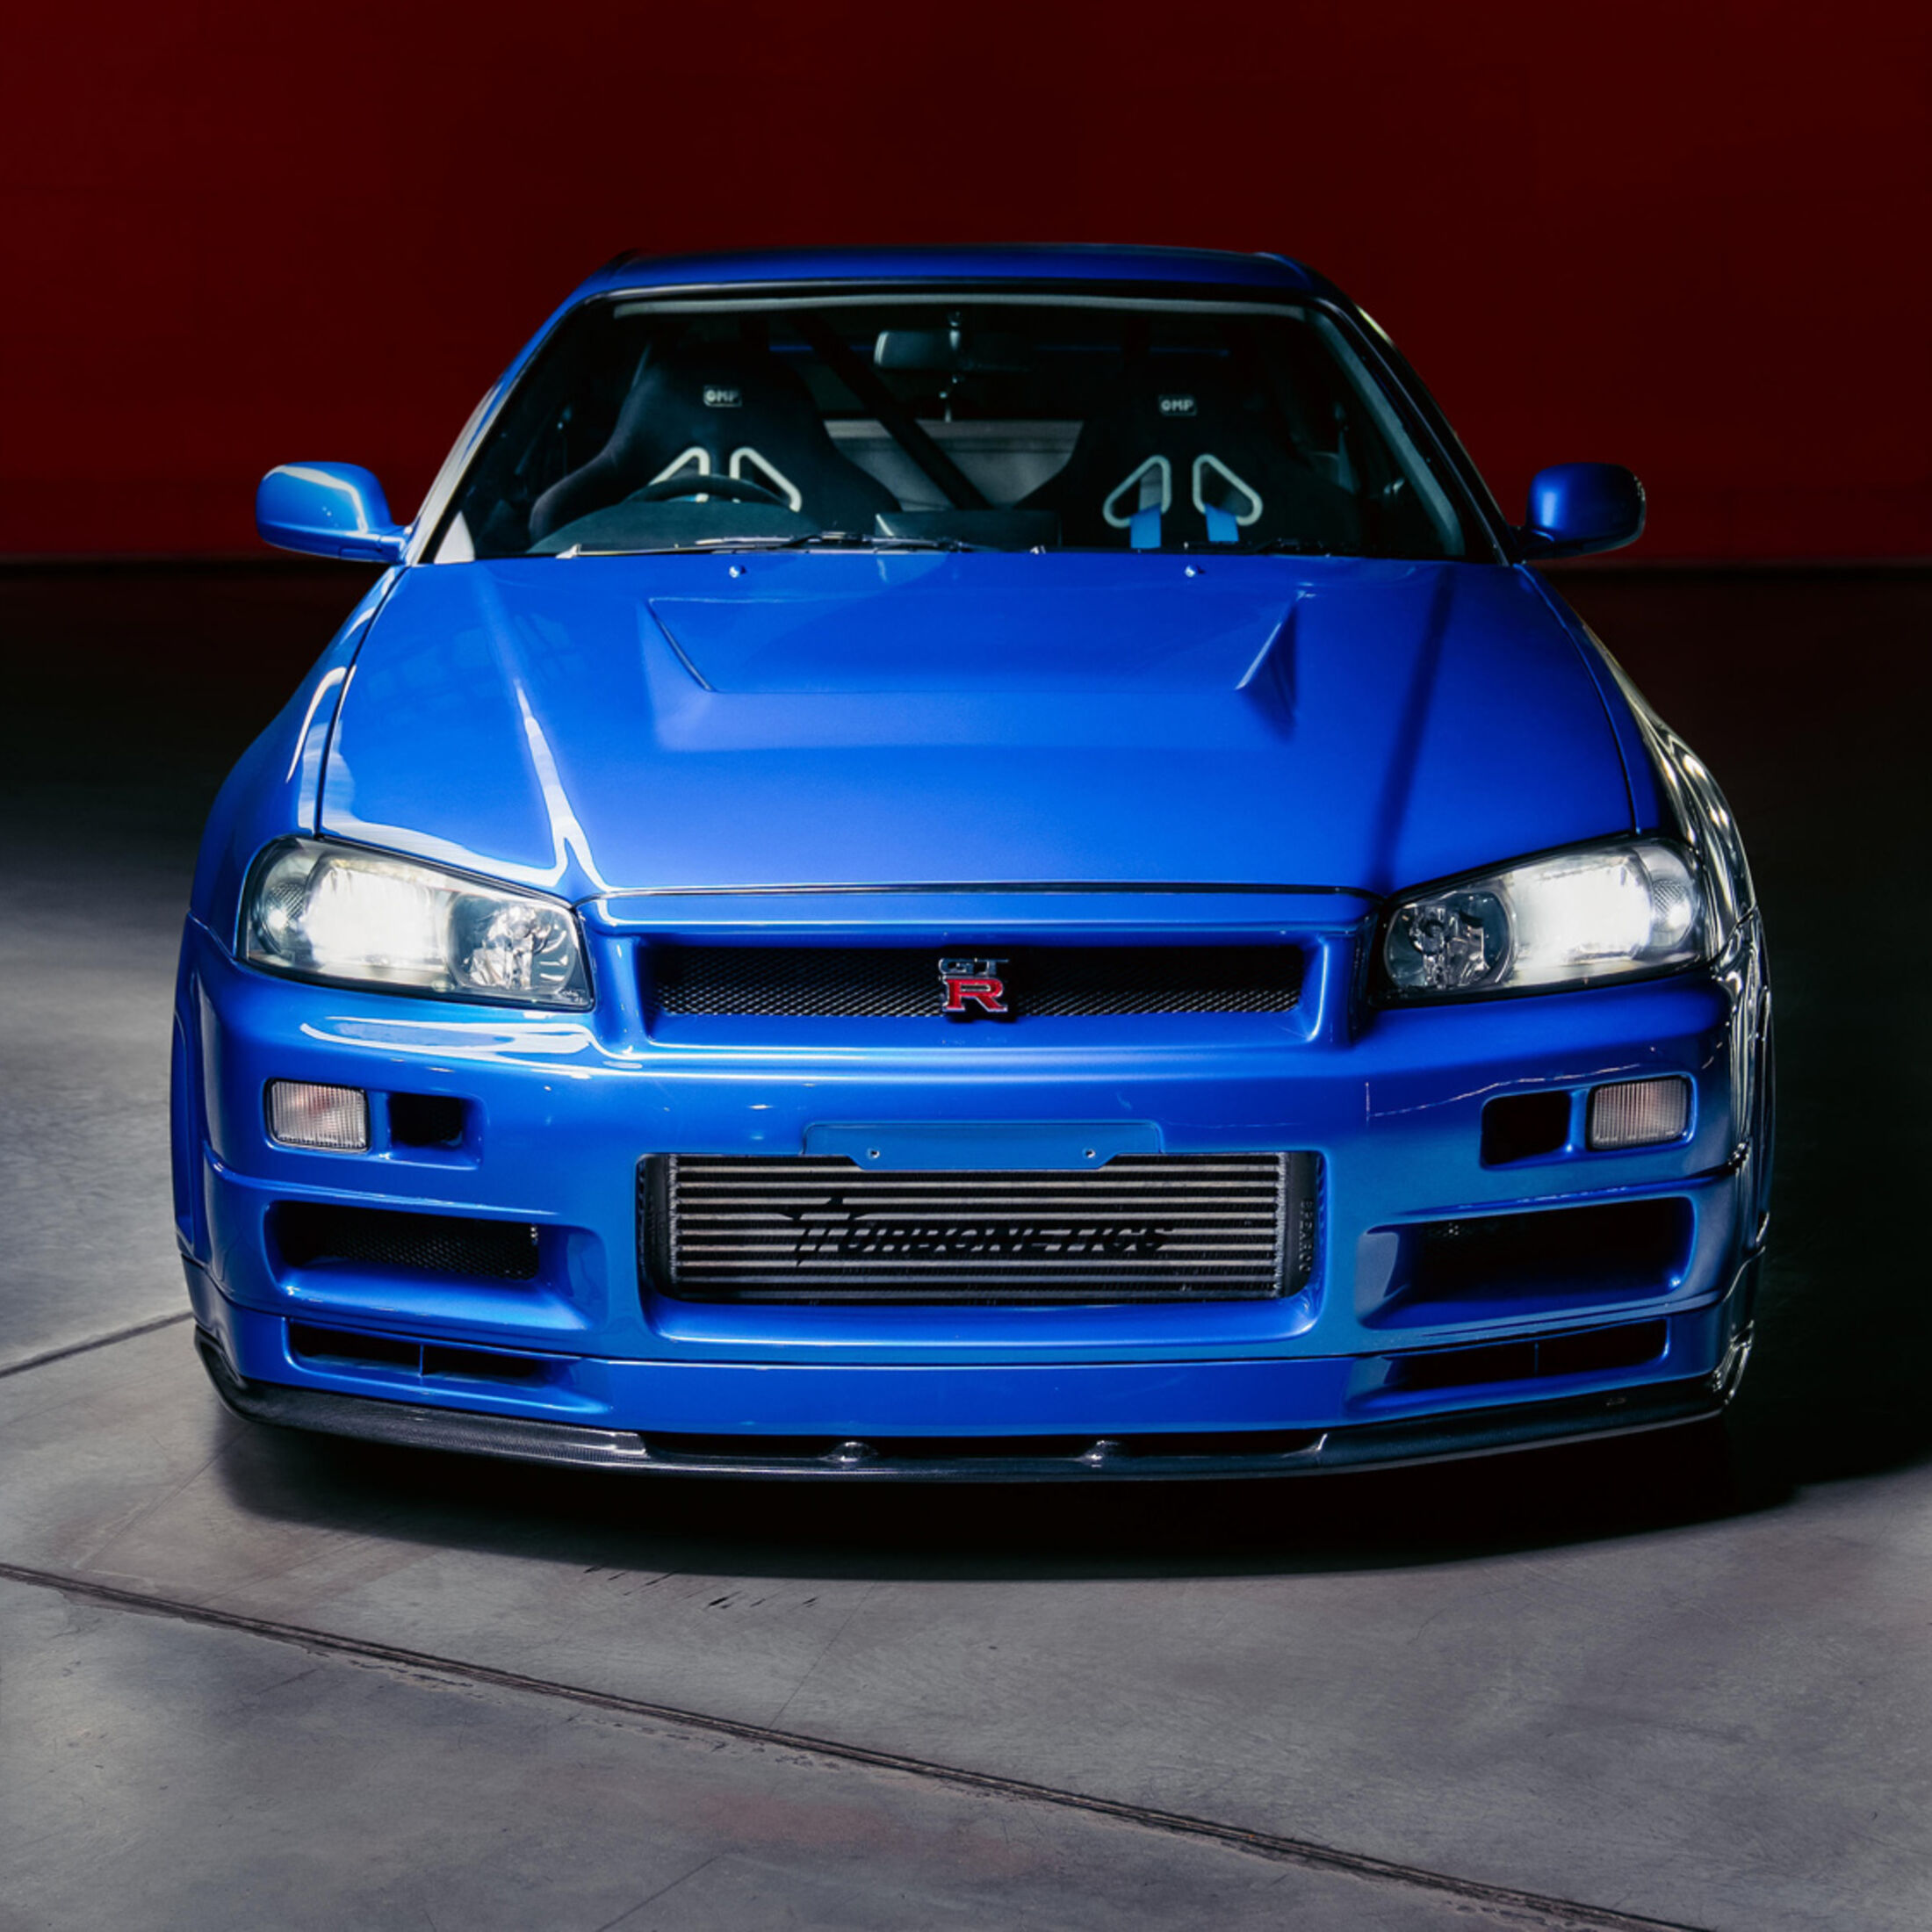 https://imgr1.auto-motor-und-sport.de/Nissan-Skyline-R34-GT-R-Fast-and-Furious-jsonLd1x1-6033b78f-1988675.jpg